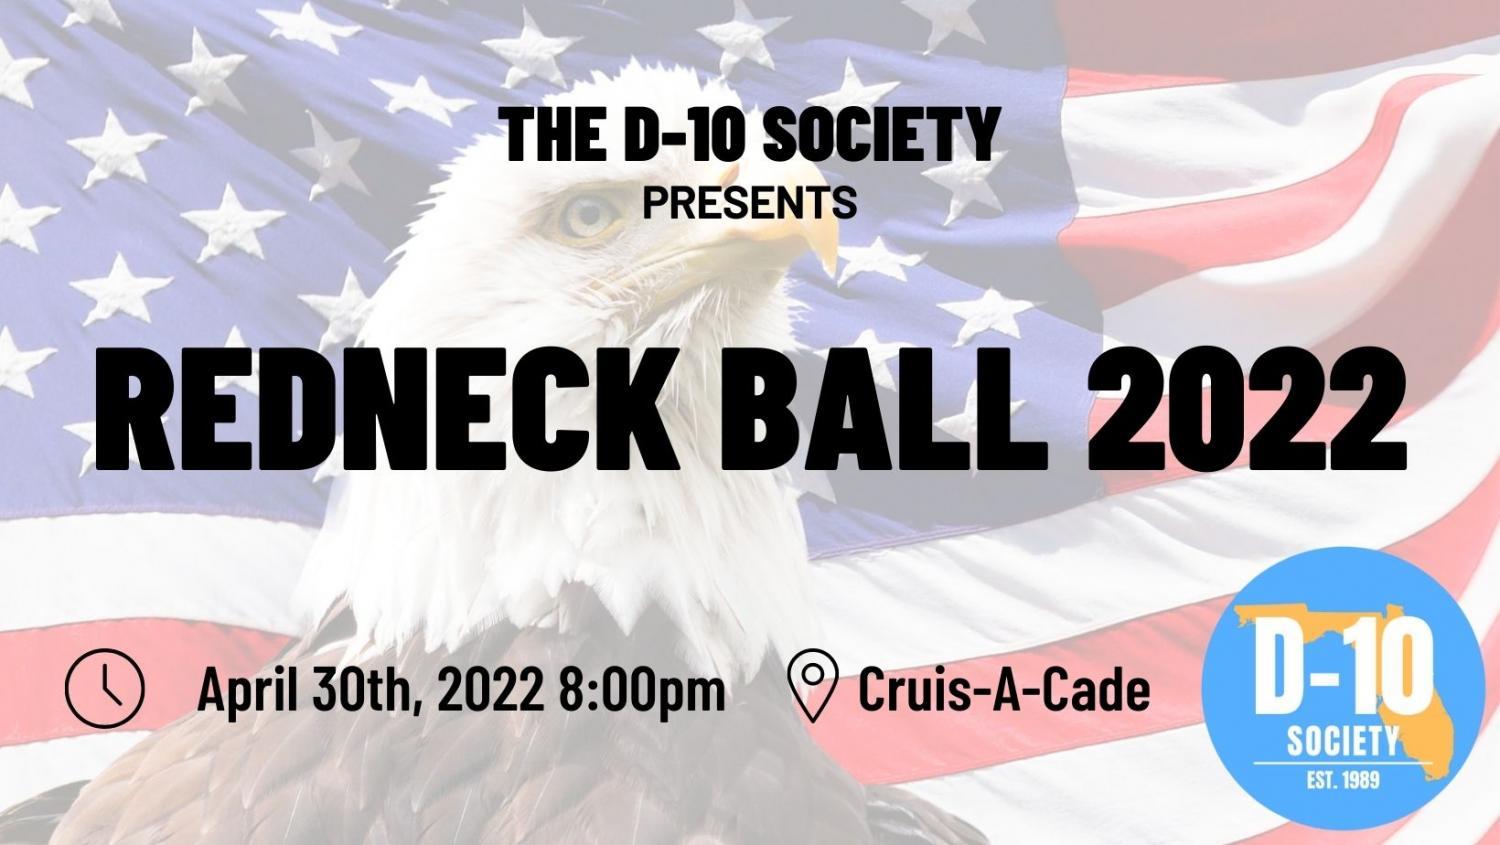 The D-10 Society's Redneck Ball 2022